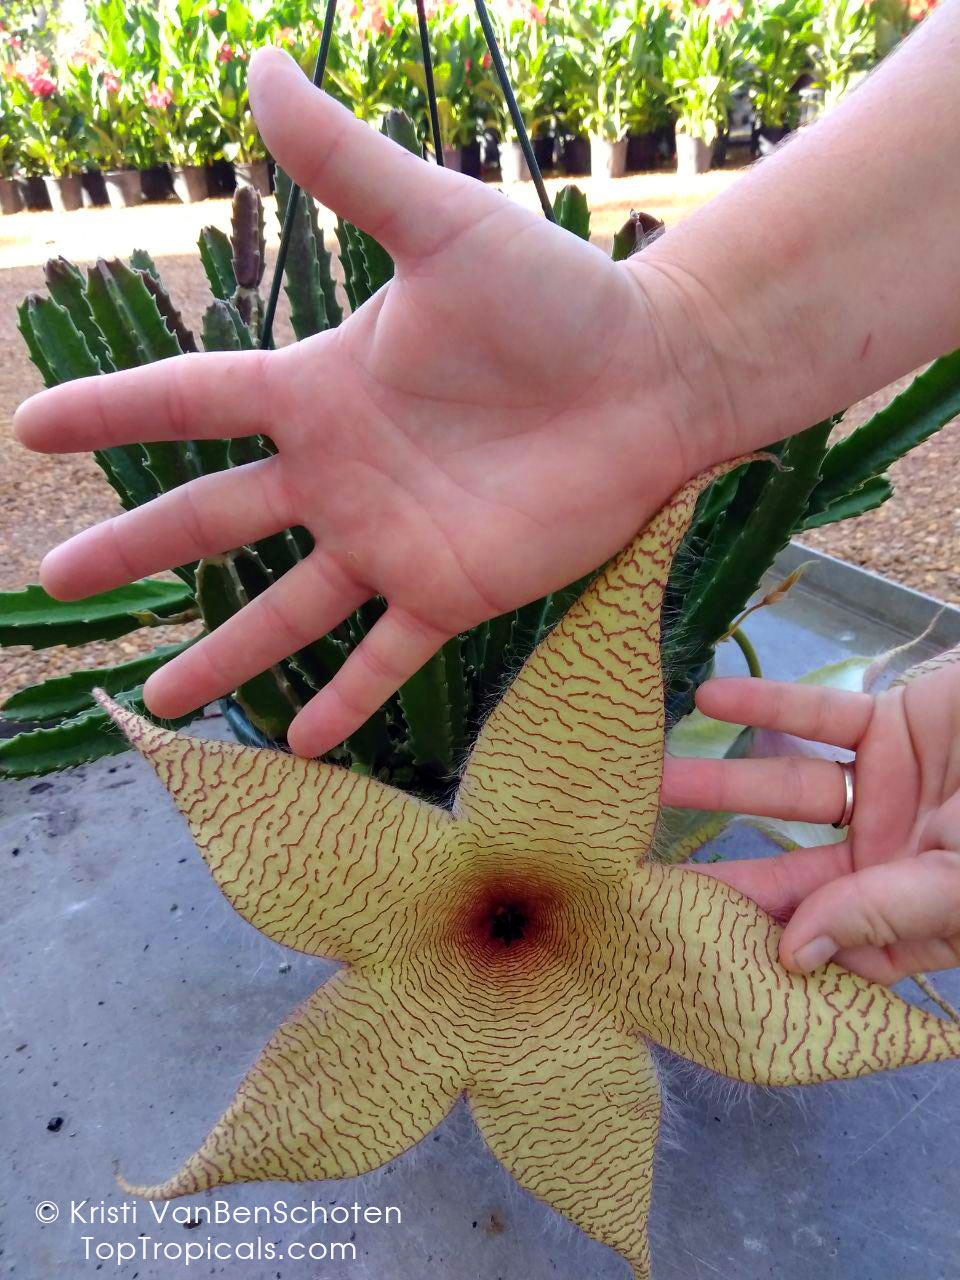 Starfish Flower - Stapelia gigantea, large flower